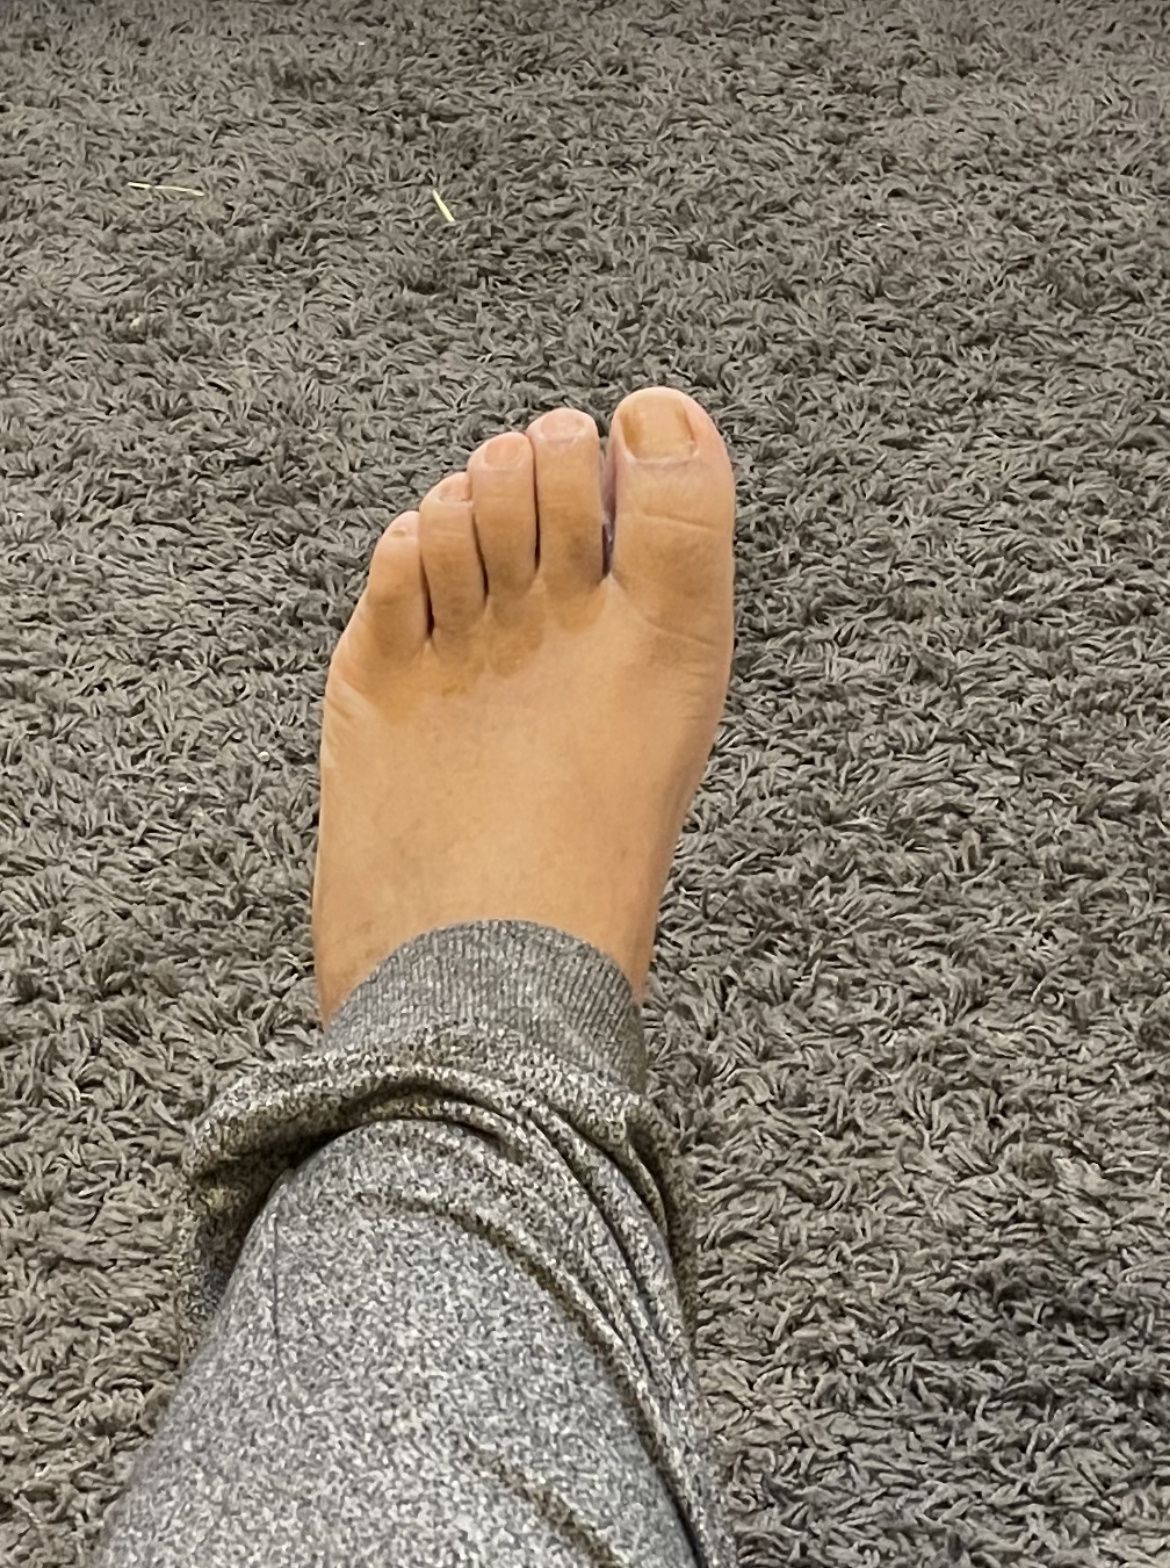 Feet pics #8